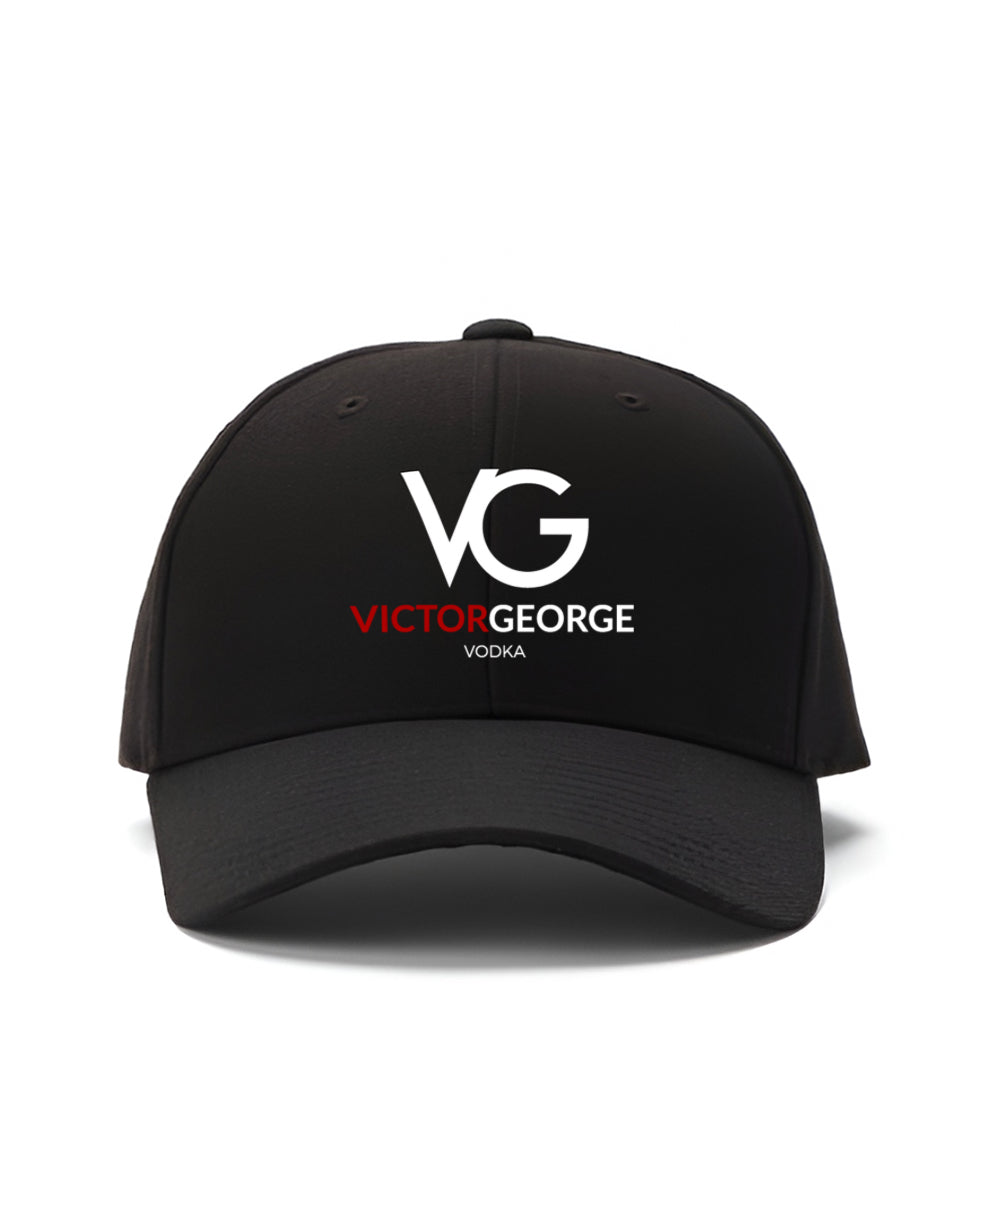 CARAMEL VICTOR GEORGE (VG) VODKA 750ML